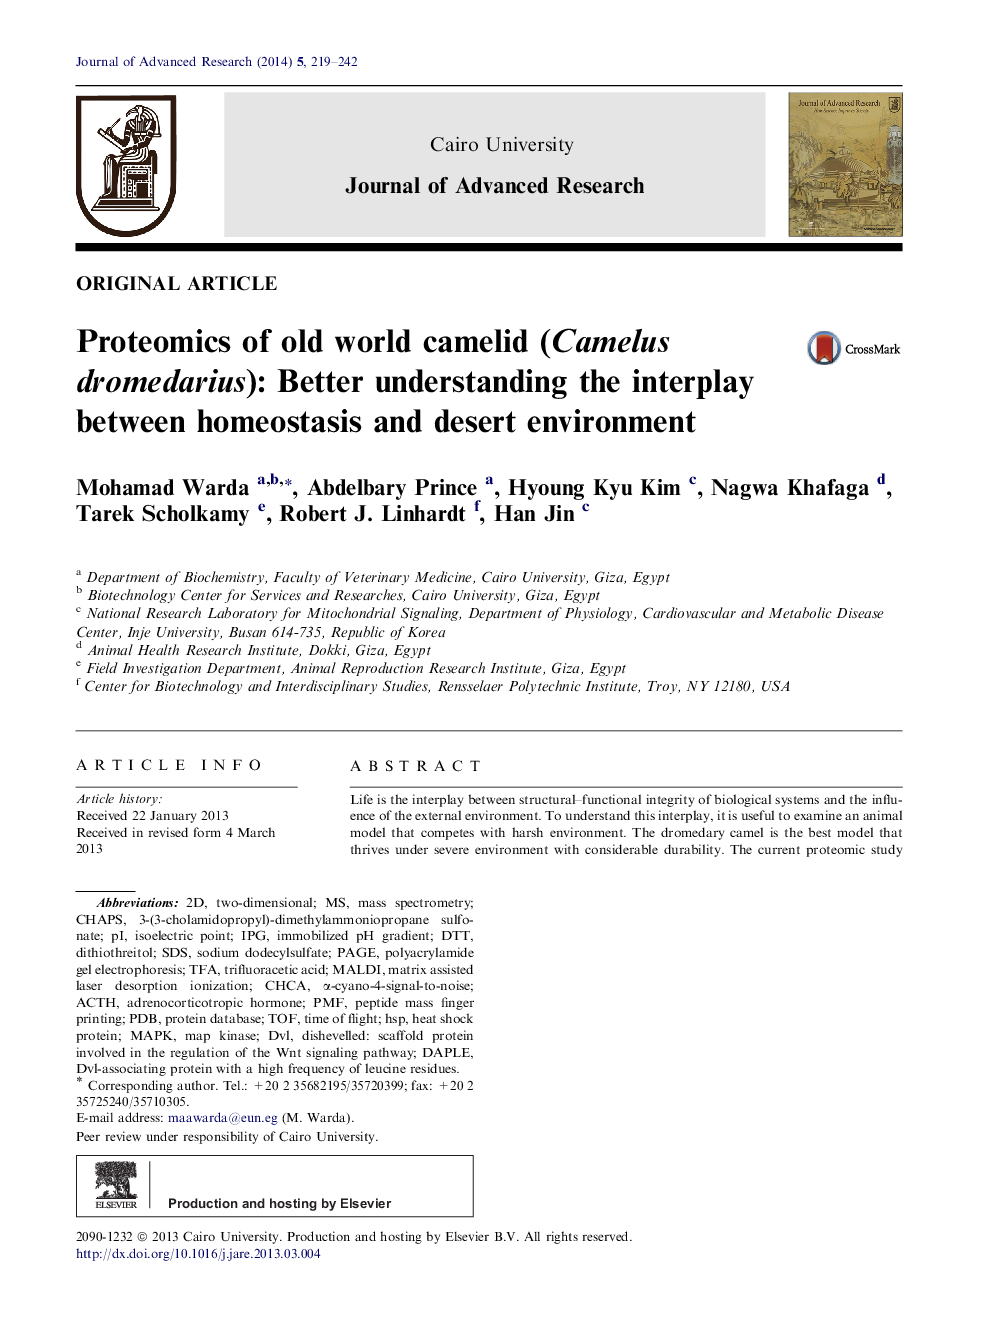 Proteomics of old world camelid (Camelus dromedarius): Better understanding the interplay between homeostasis and desert environment 